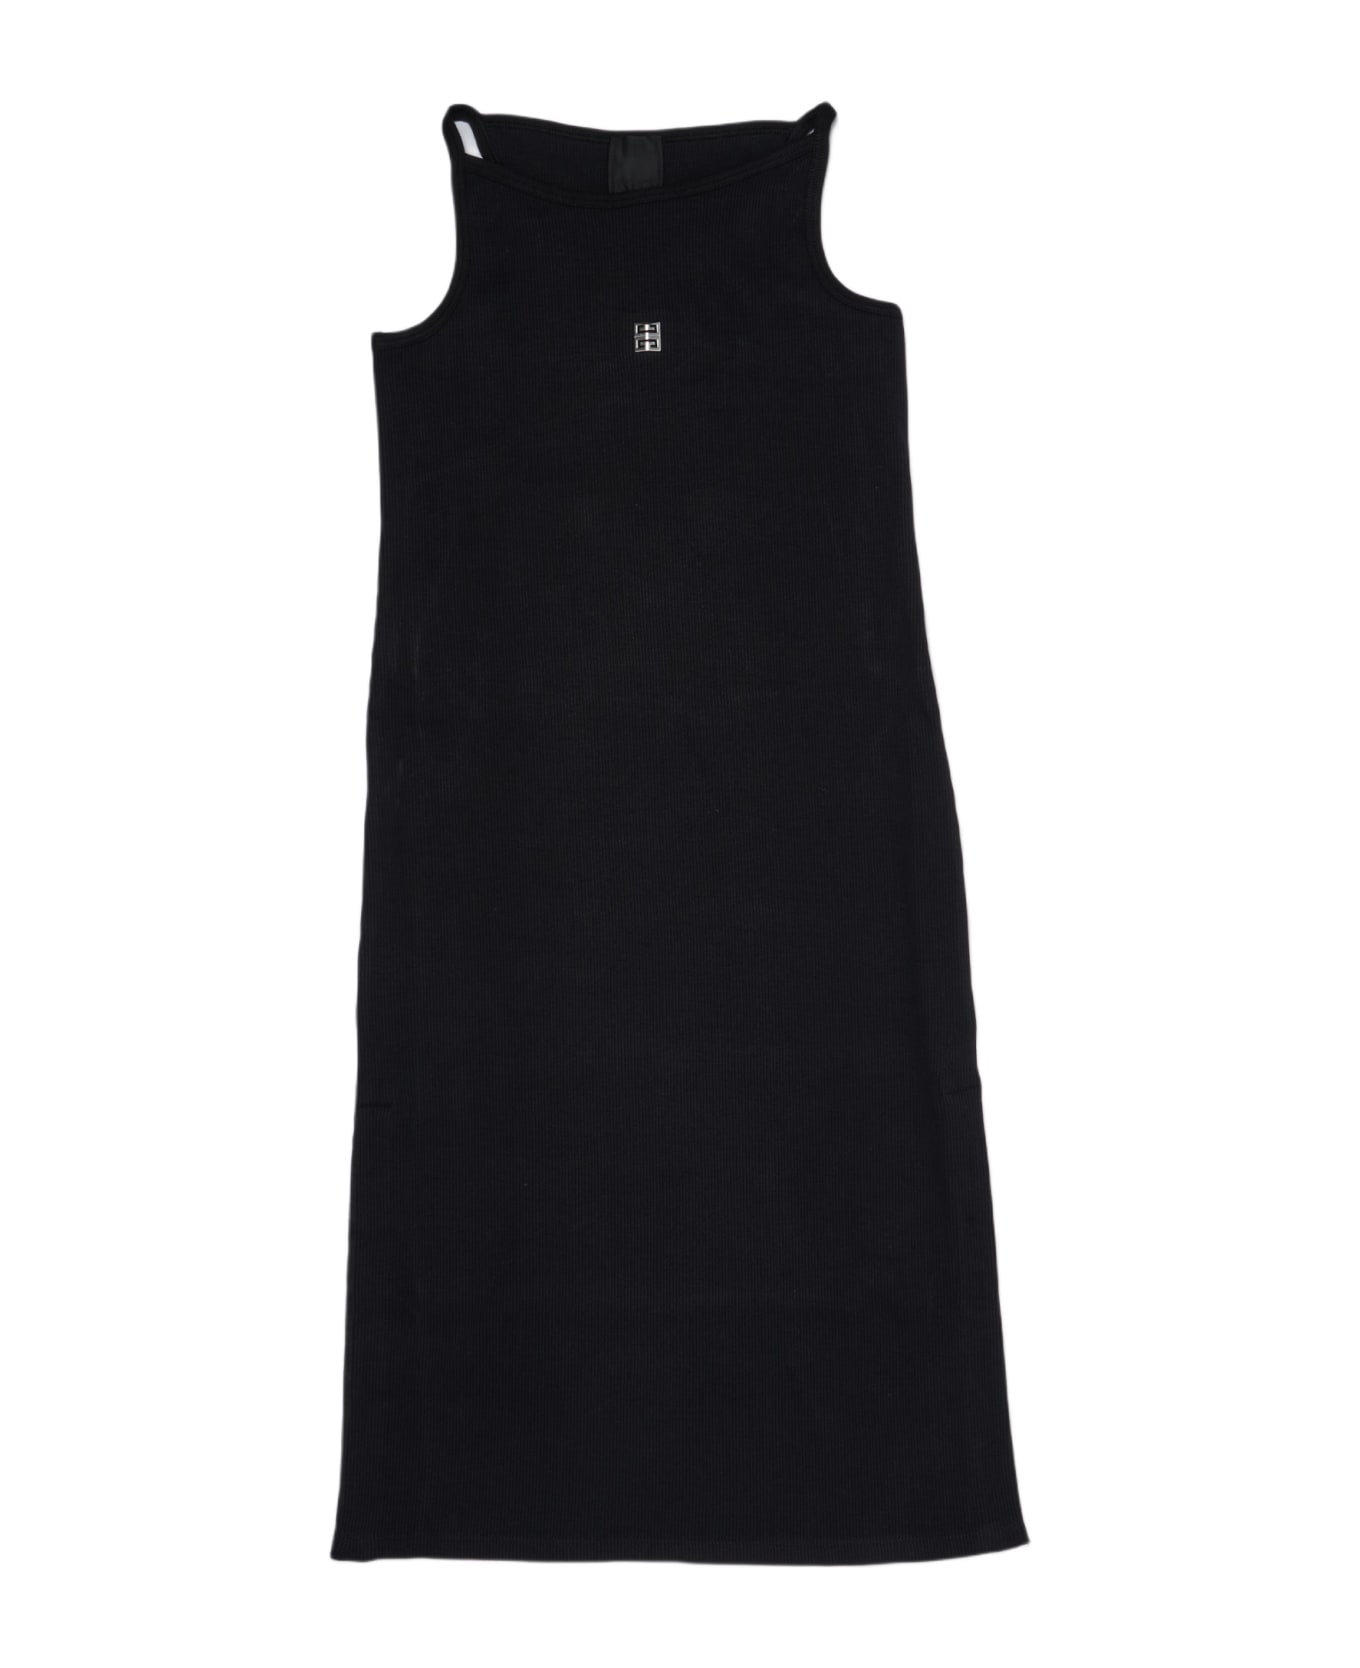 Givenchy Dress Dress - NERO